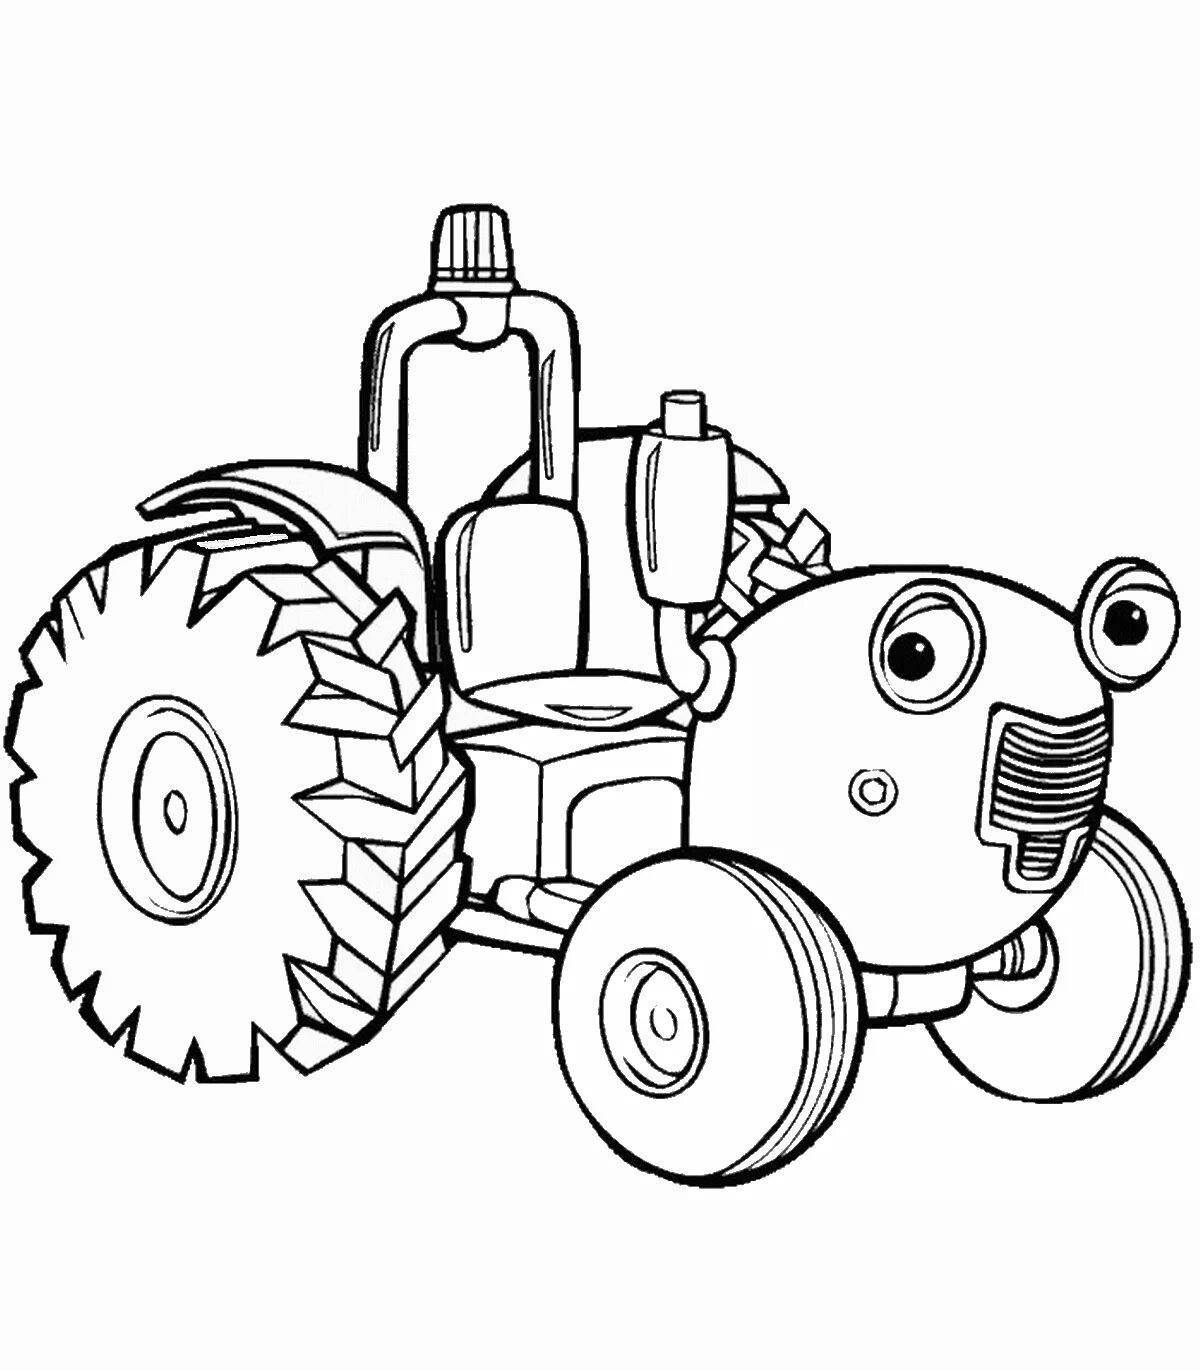 Amazing Tractors cartoon coloring page